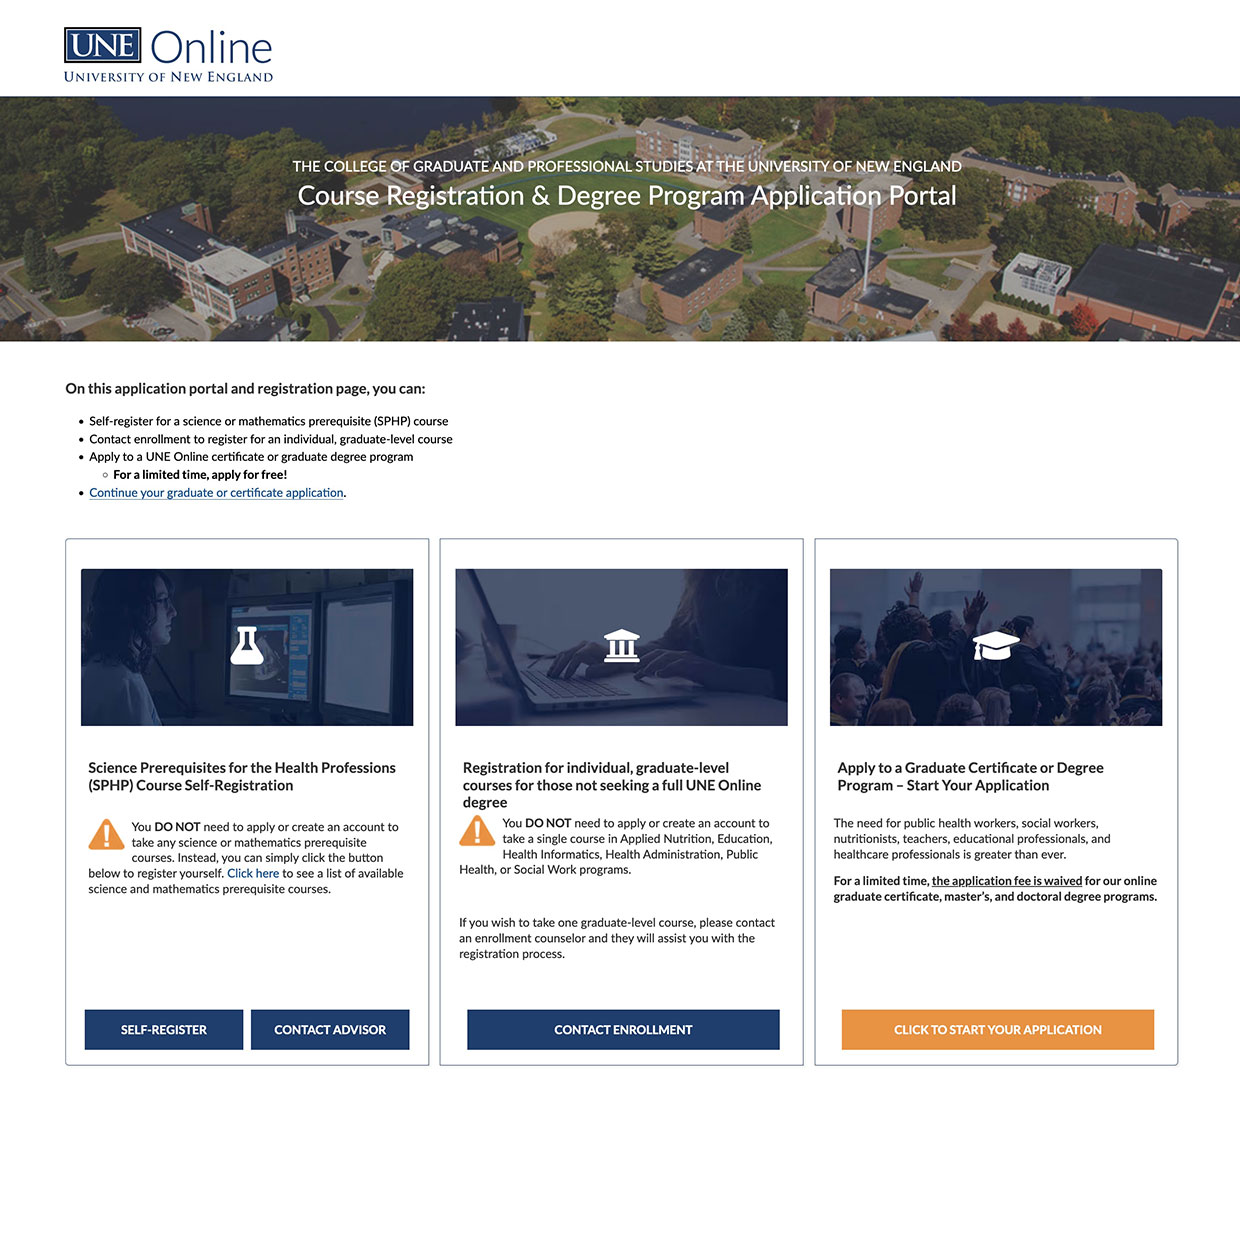 Application page for UNE Online graduate programs